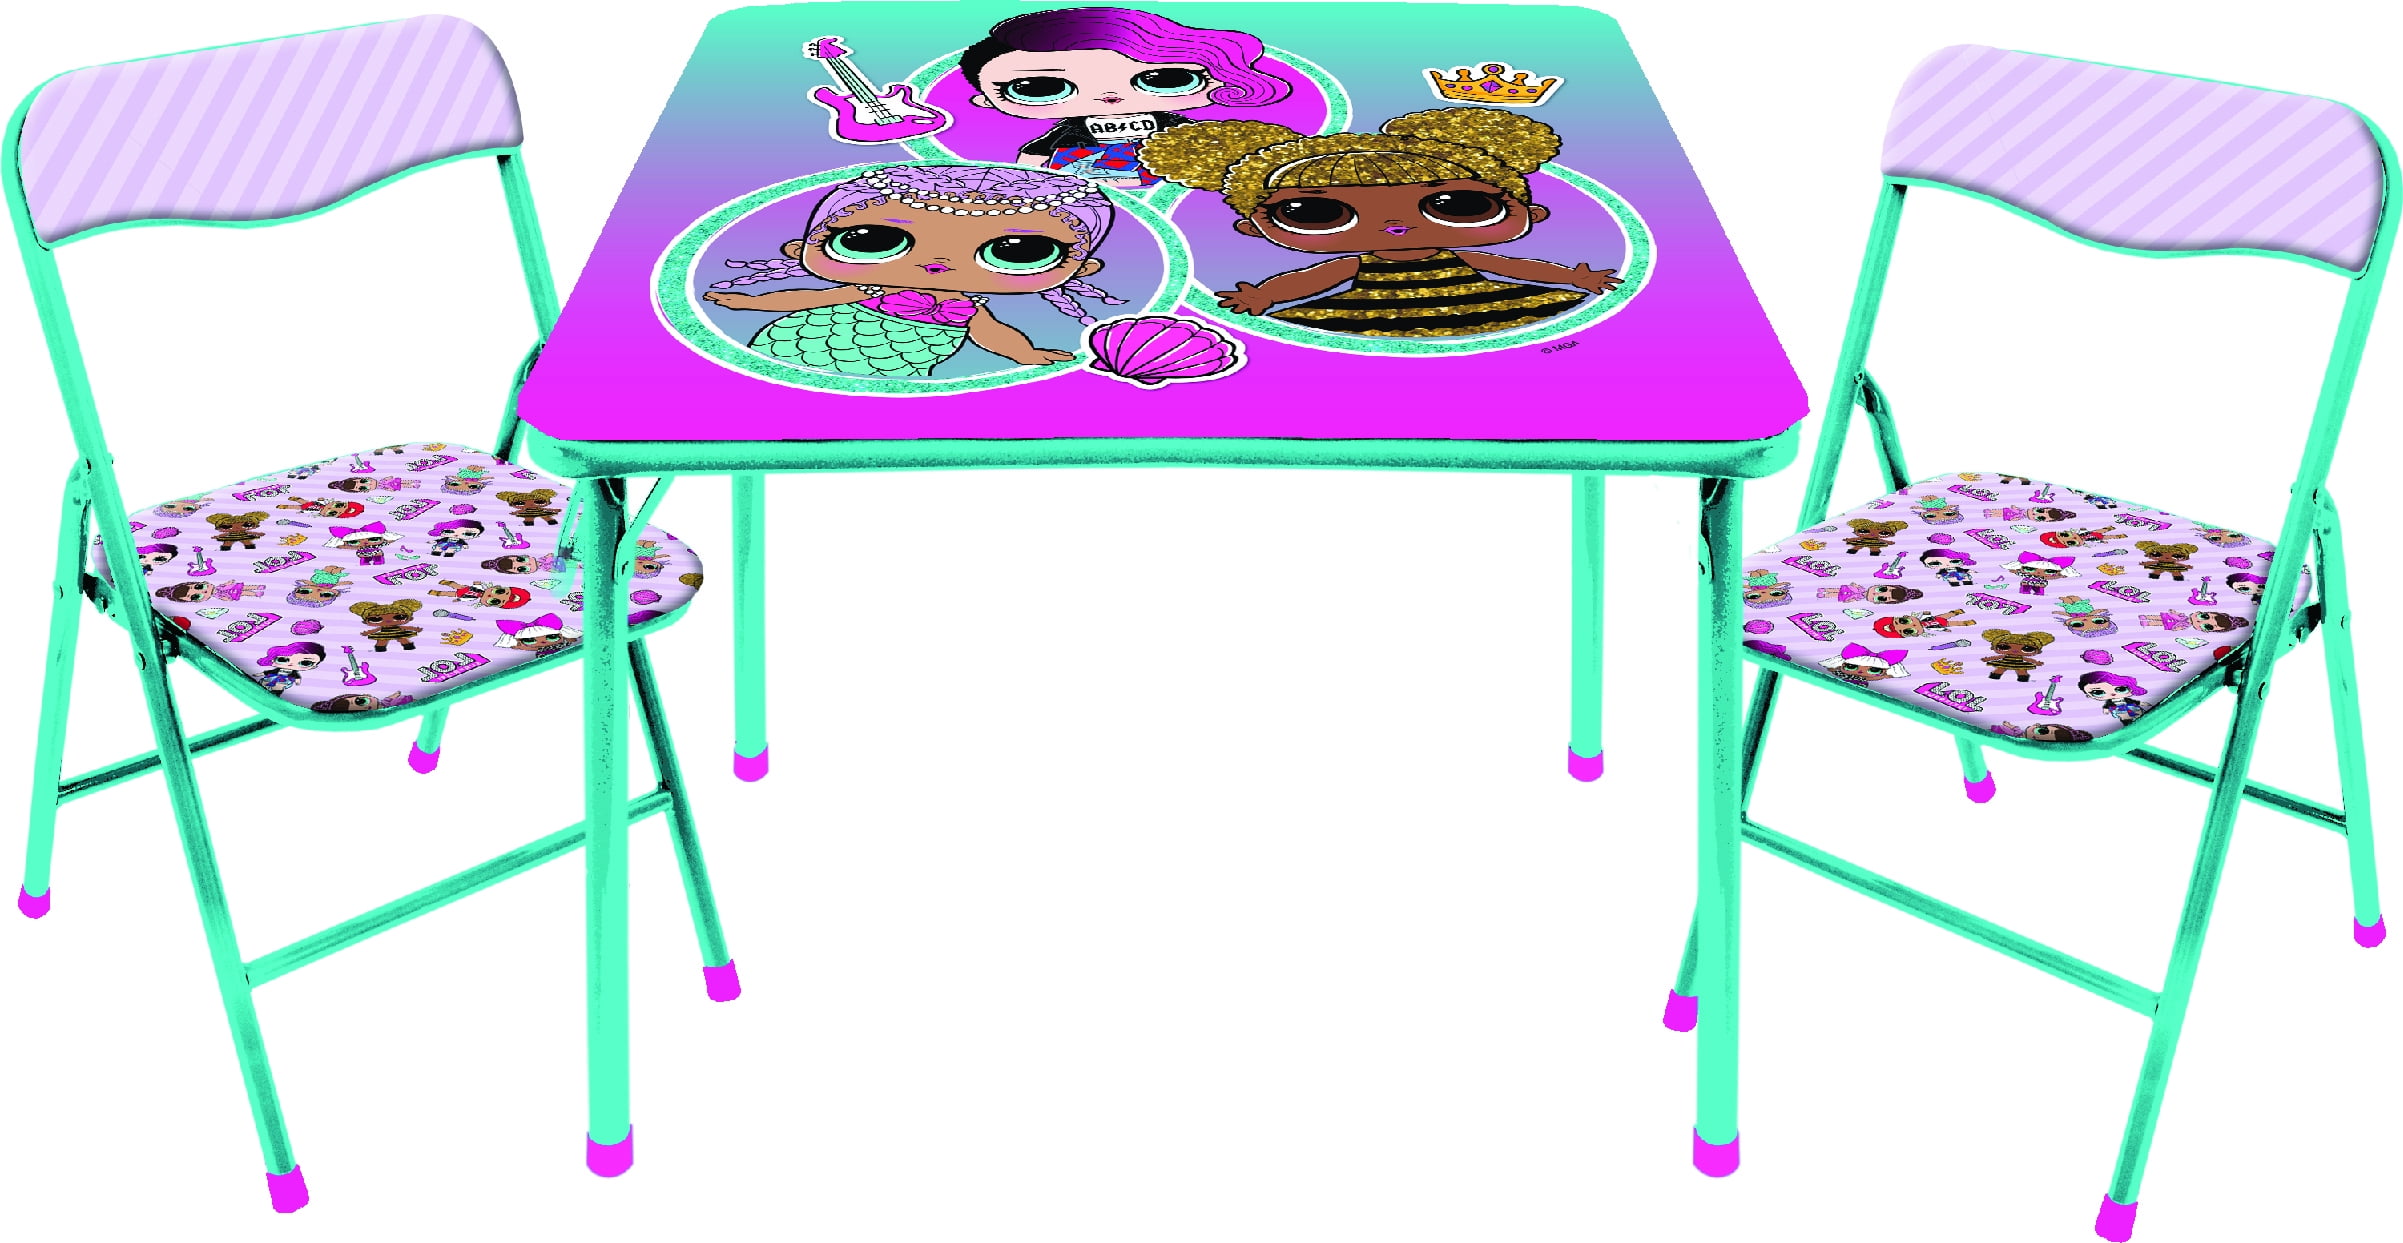 little table for kids